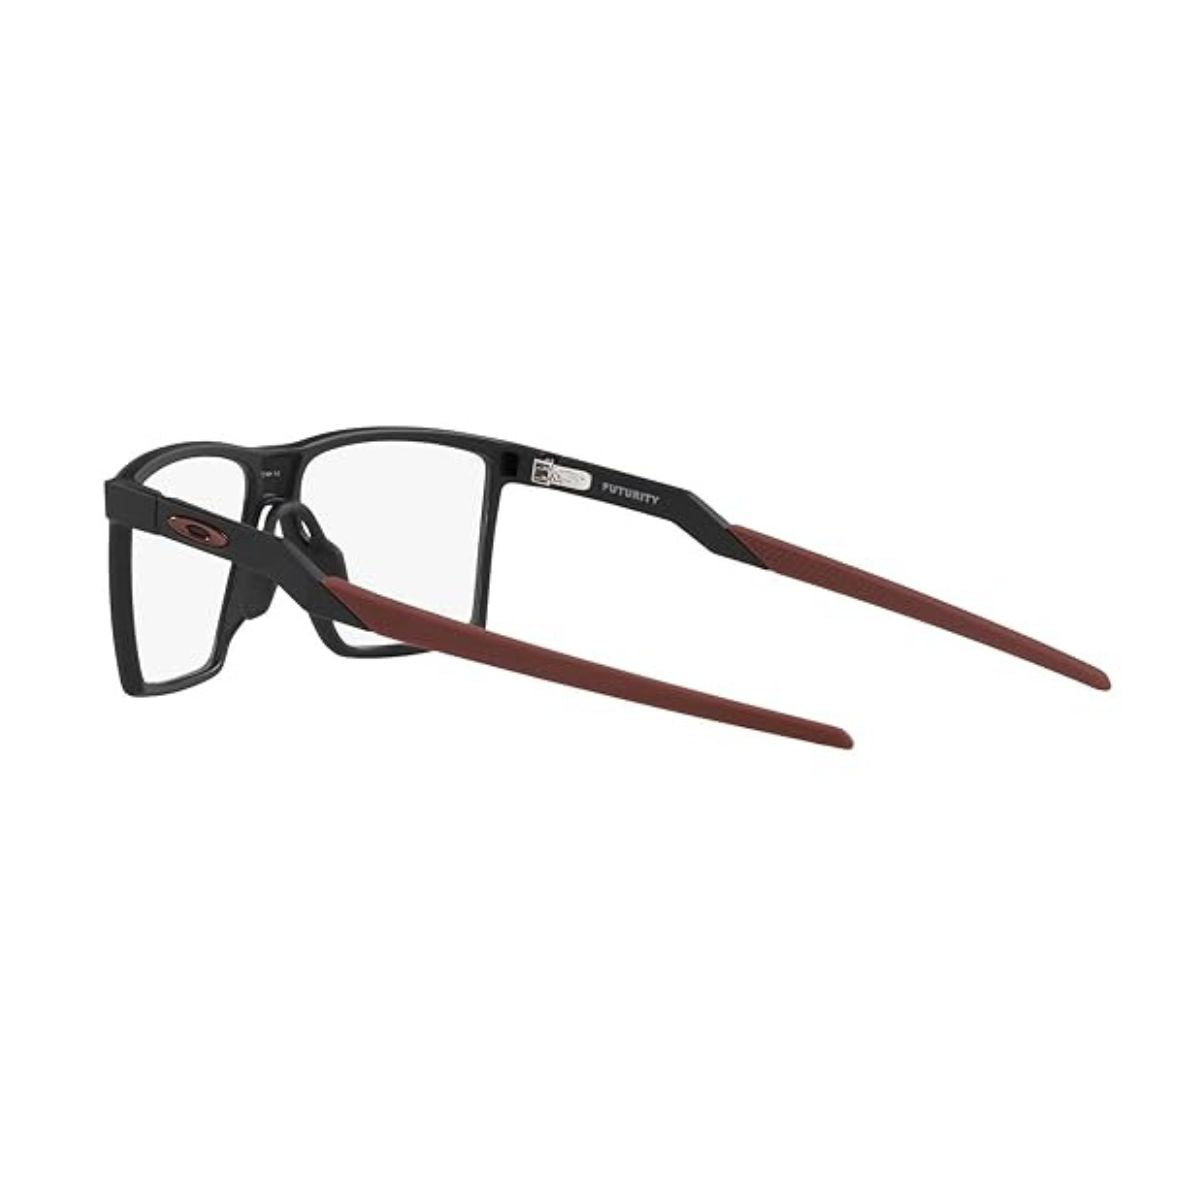 "best Oakley 8052 0455 male eyeglasses frame online at optorium"